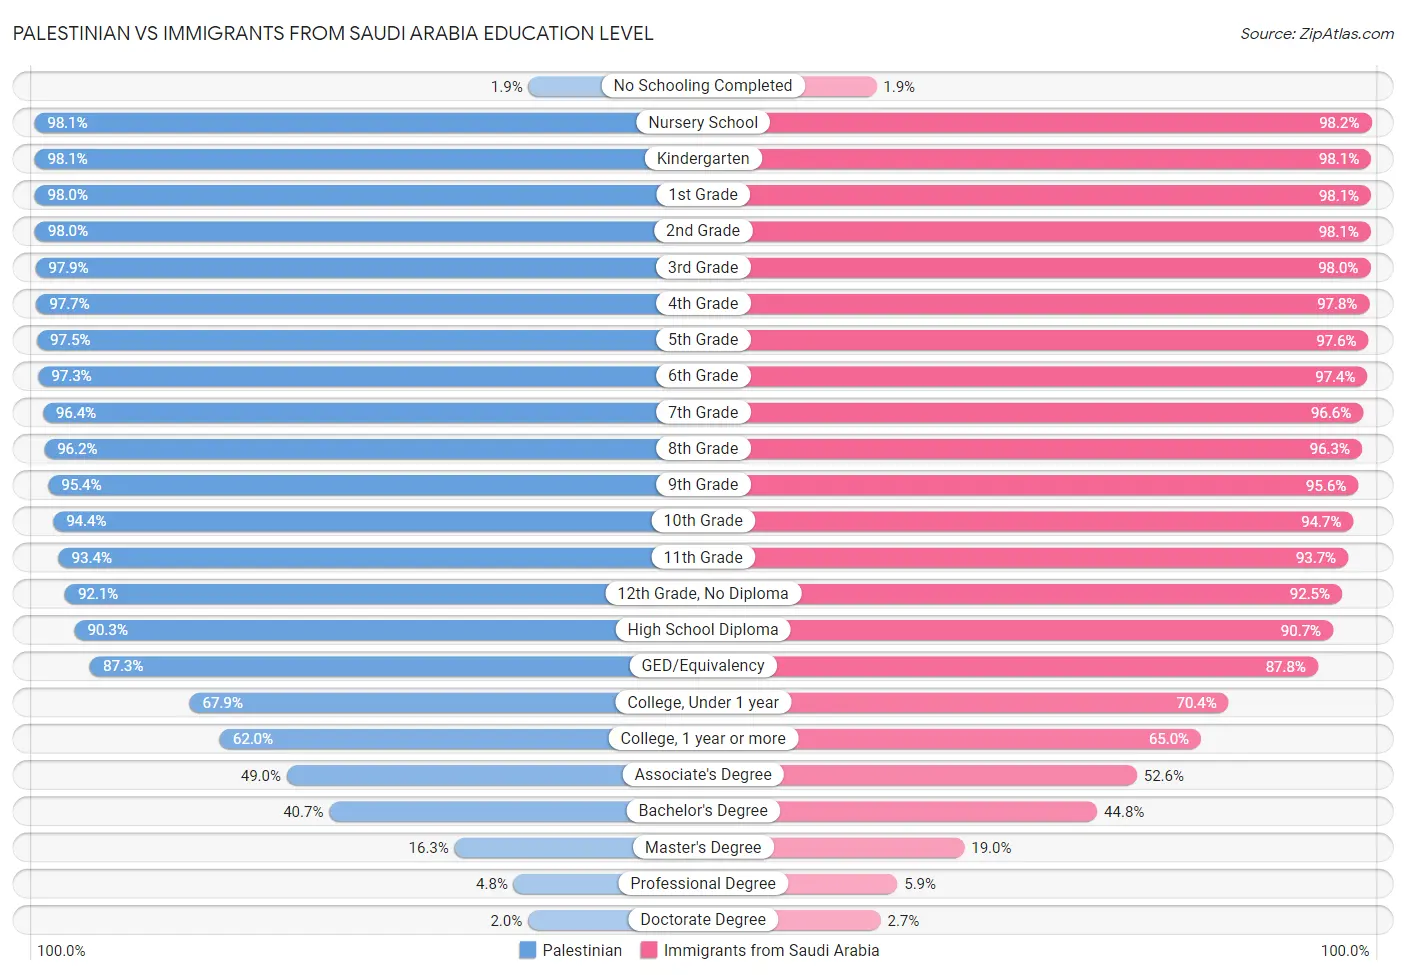 Palestinian vs Immigrants from Saudi Arabia Education Level